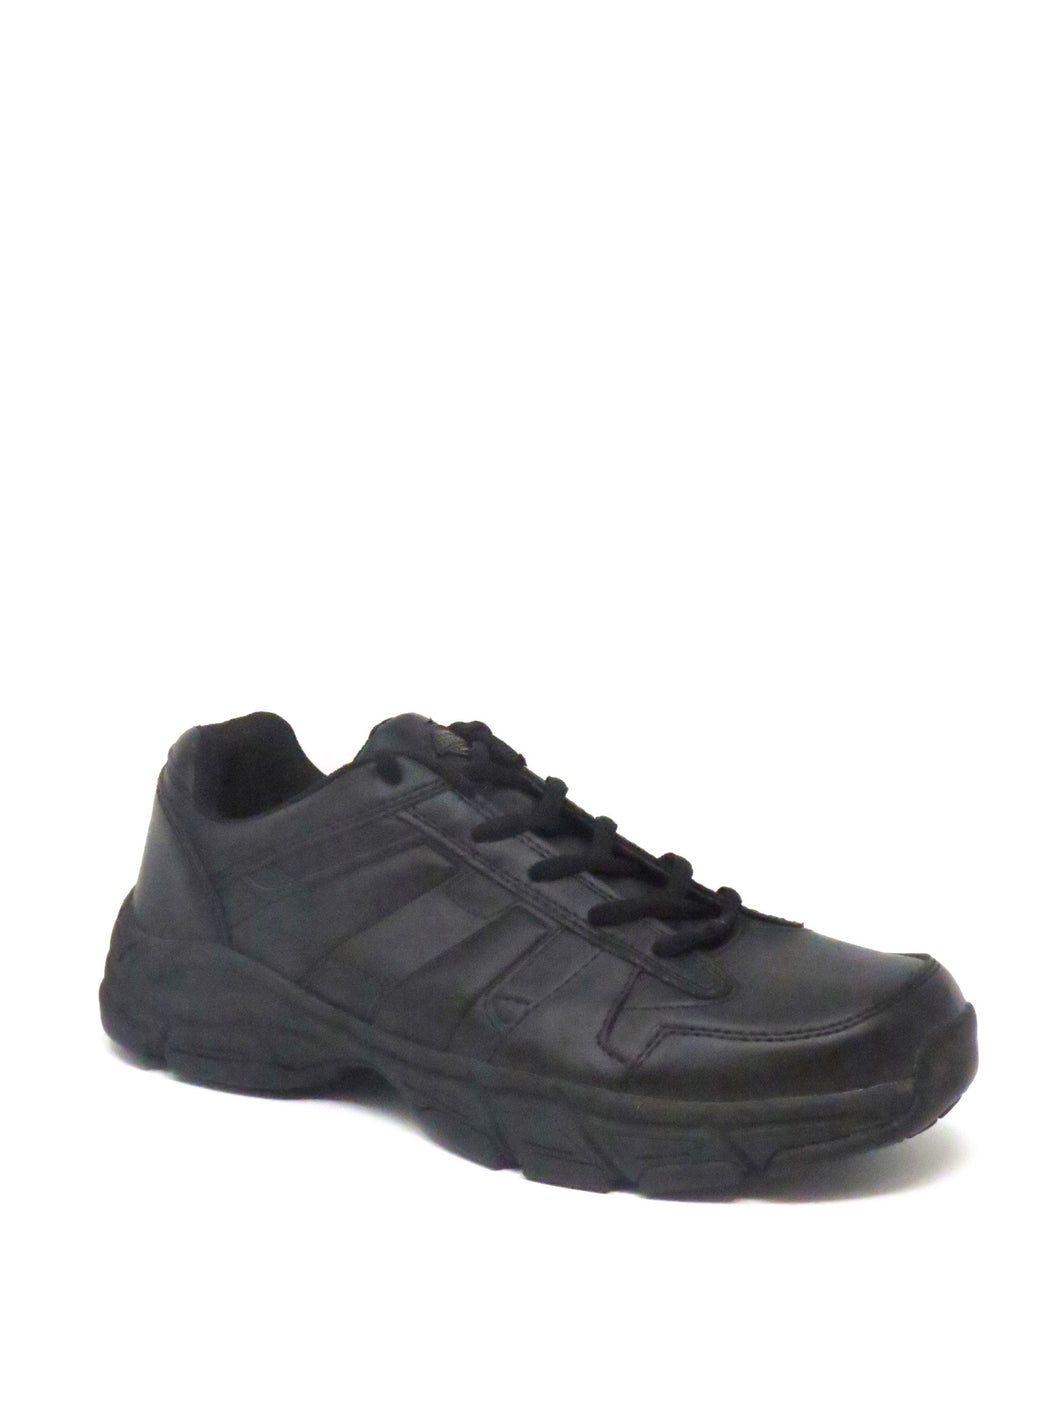 Men's | Dickies | SR4515M | Slip Resistant Shoe | Black